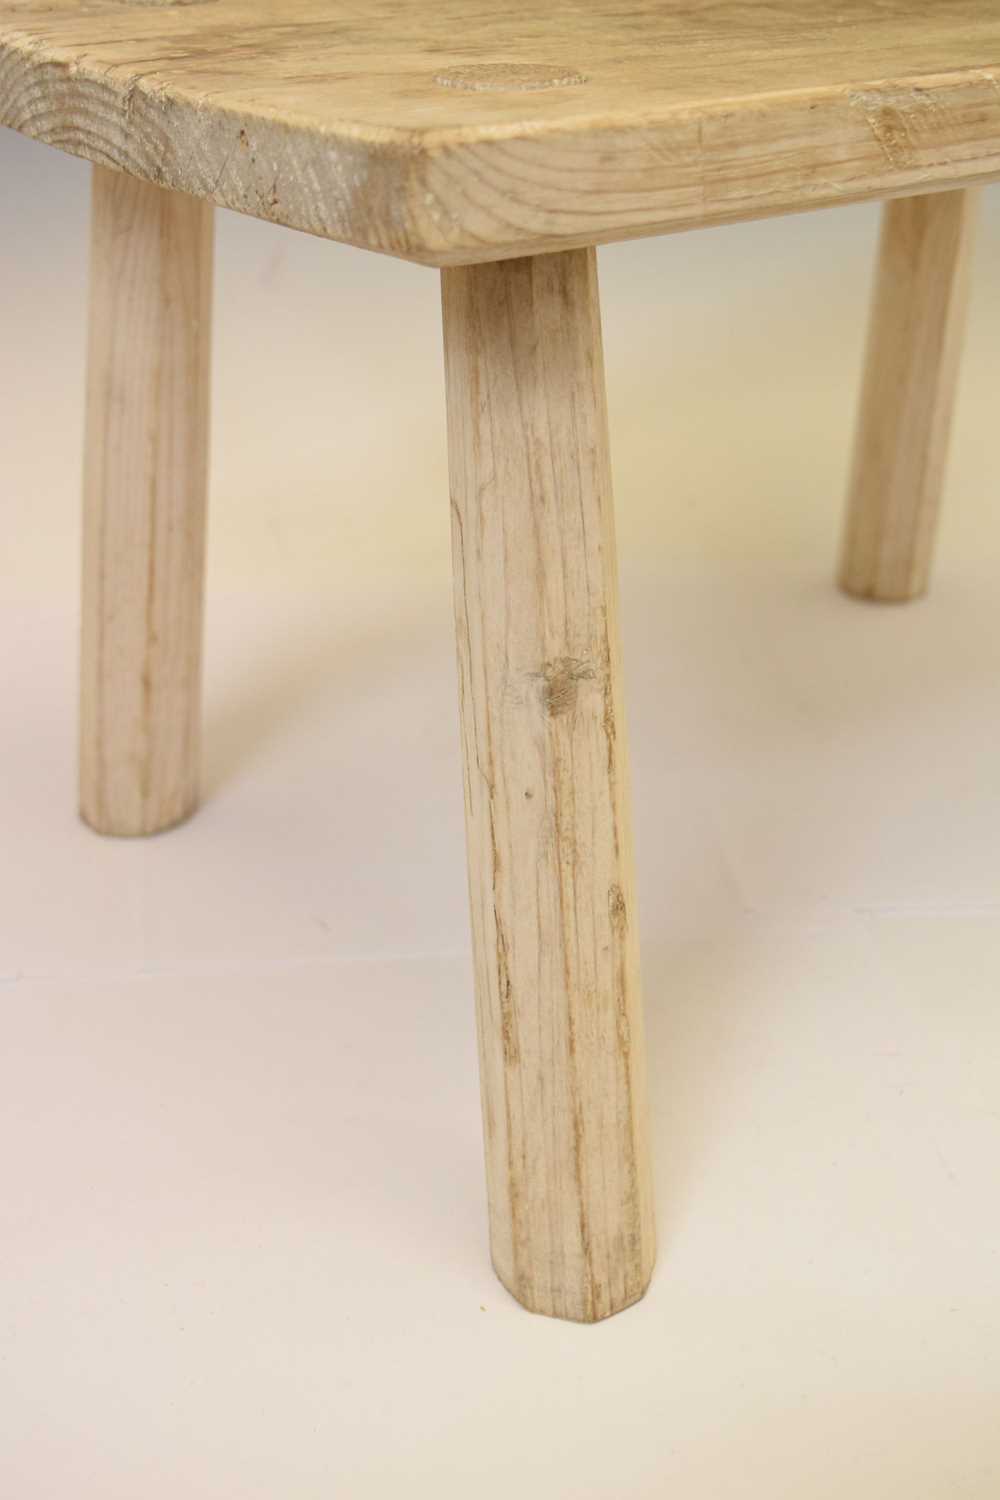 Rustic four-legged pine stool - Image 5 of 6